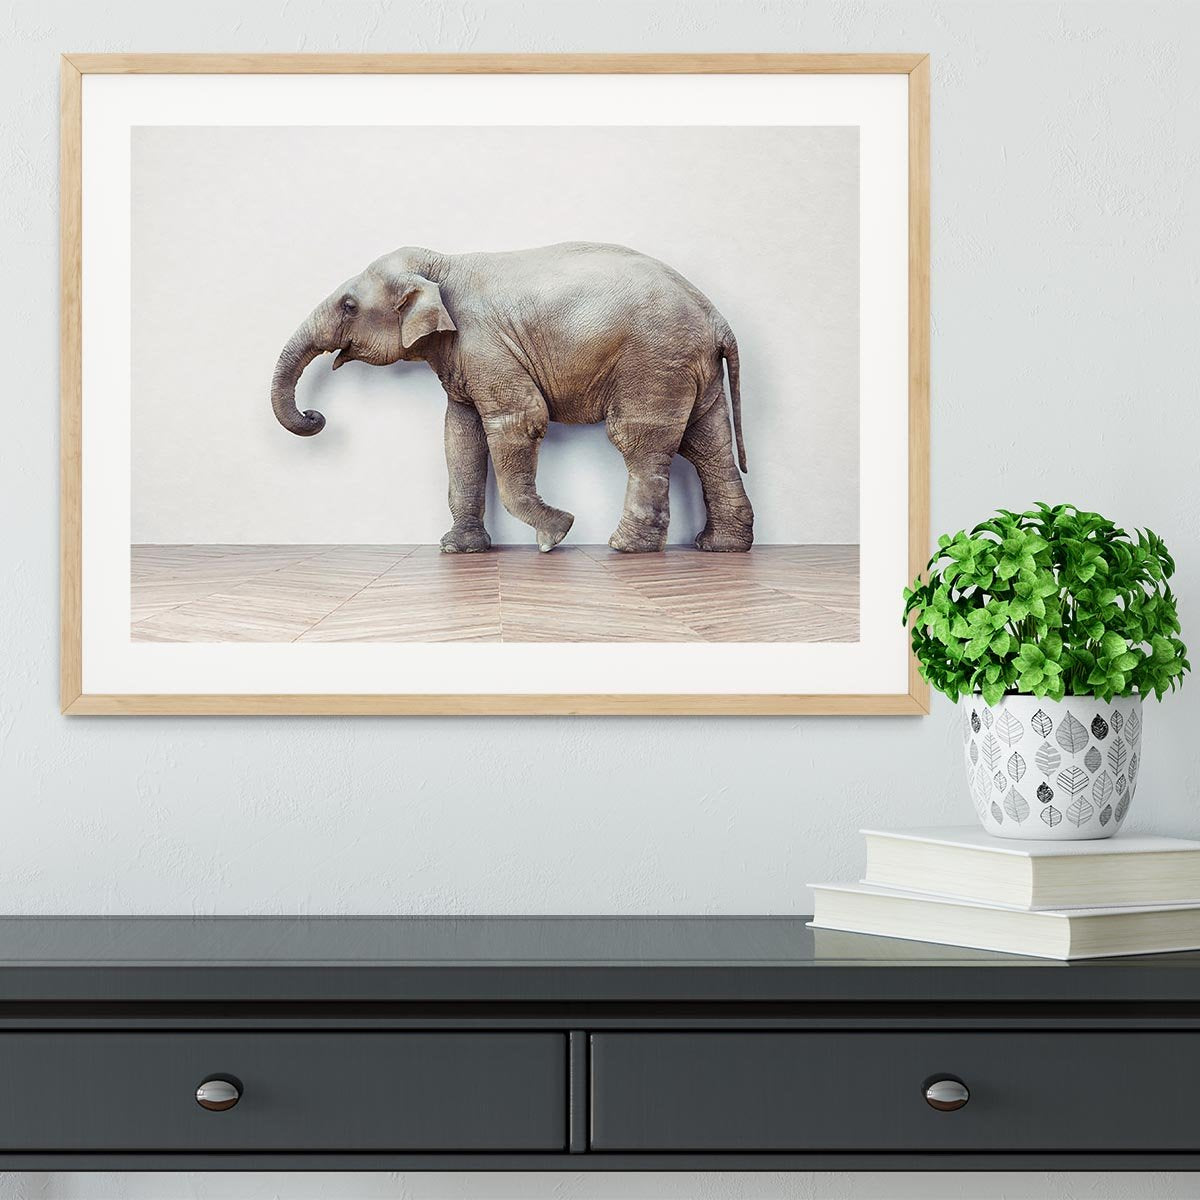 The elephant calm in the room near white wall Framed Print - Canvas Art Rocks - 3